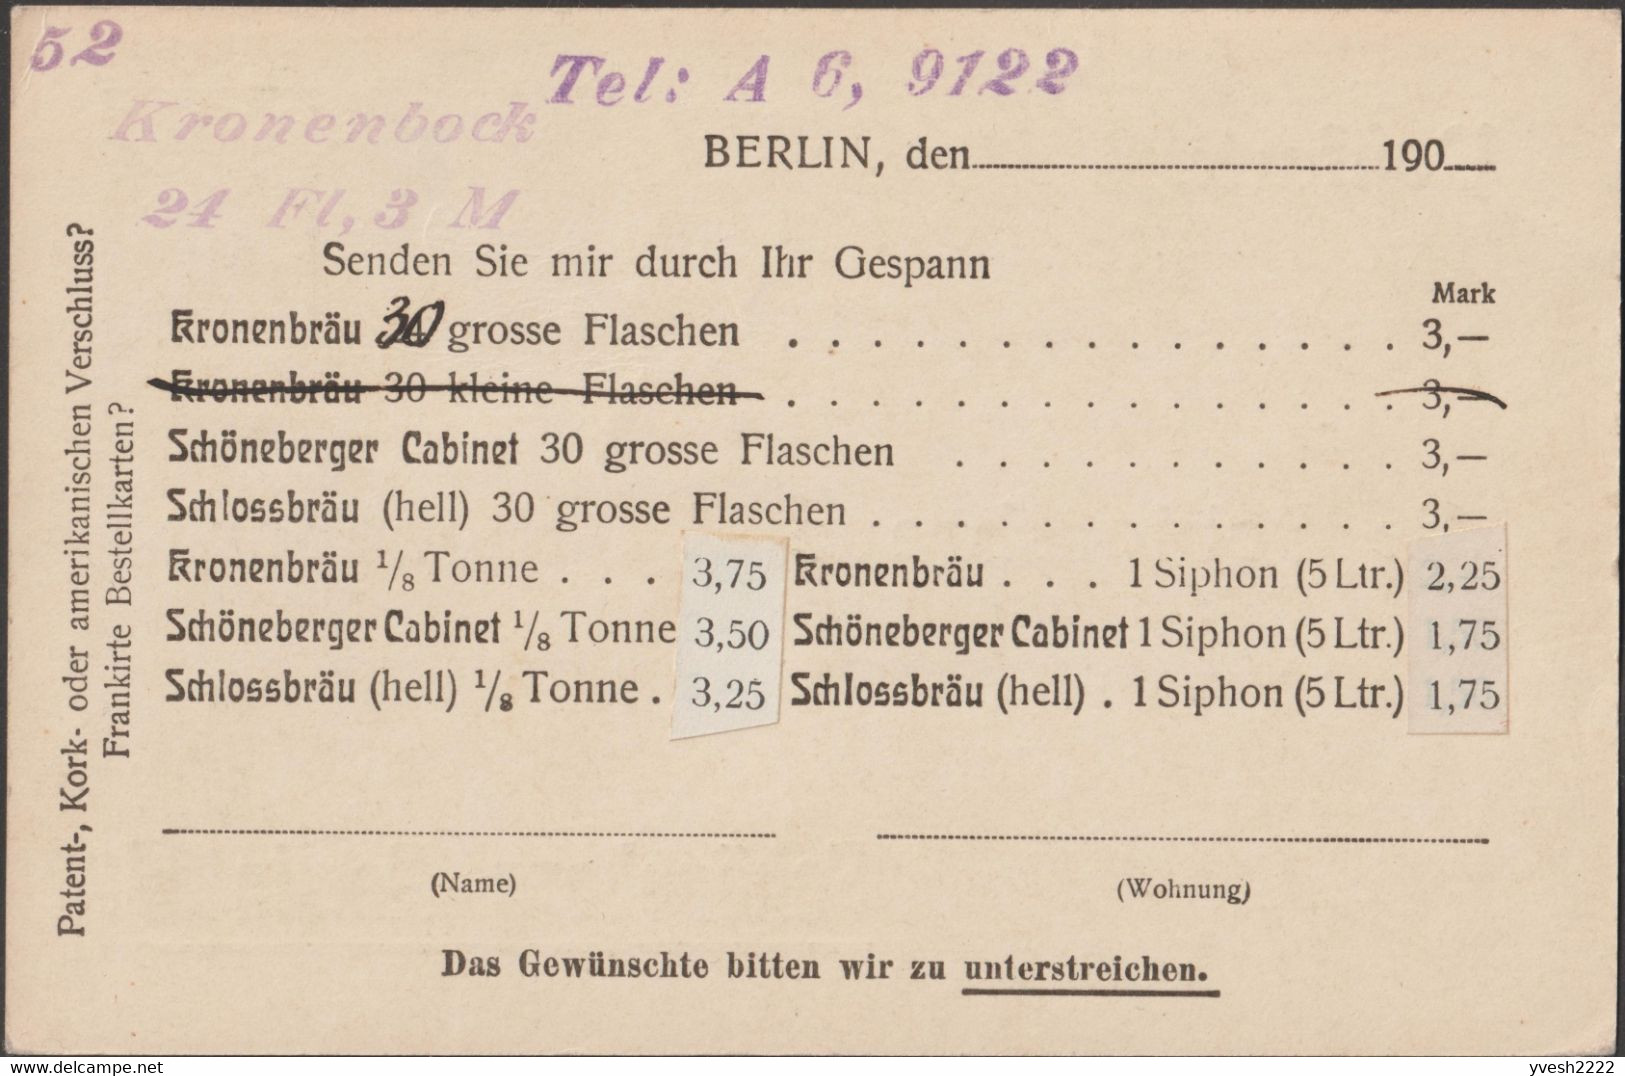 Allemagne 1900. 3 cartes publicitaires entiers TSC. Schlossbrauerei Schöneberg Berlin. Kronenbräu, Schöneberger Cabinet